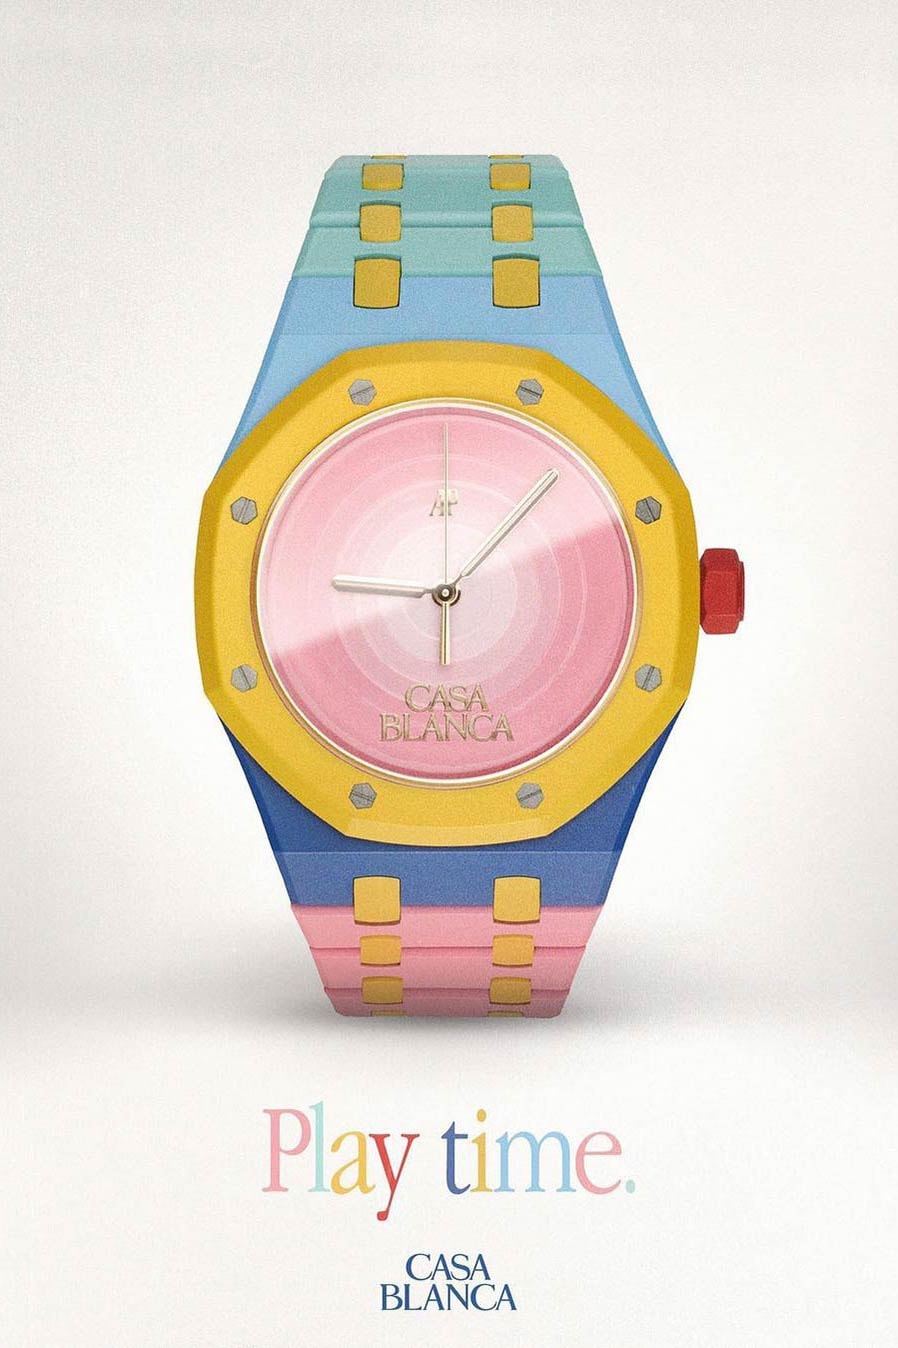 Casablanca x MAD Paris Audemars Piguet Royal Oak custom watches colorful instagram colorblocking luxury swiss automatic watches